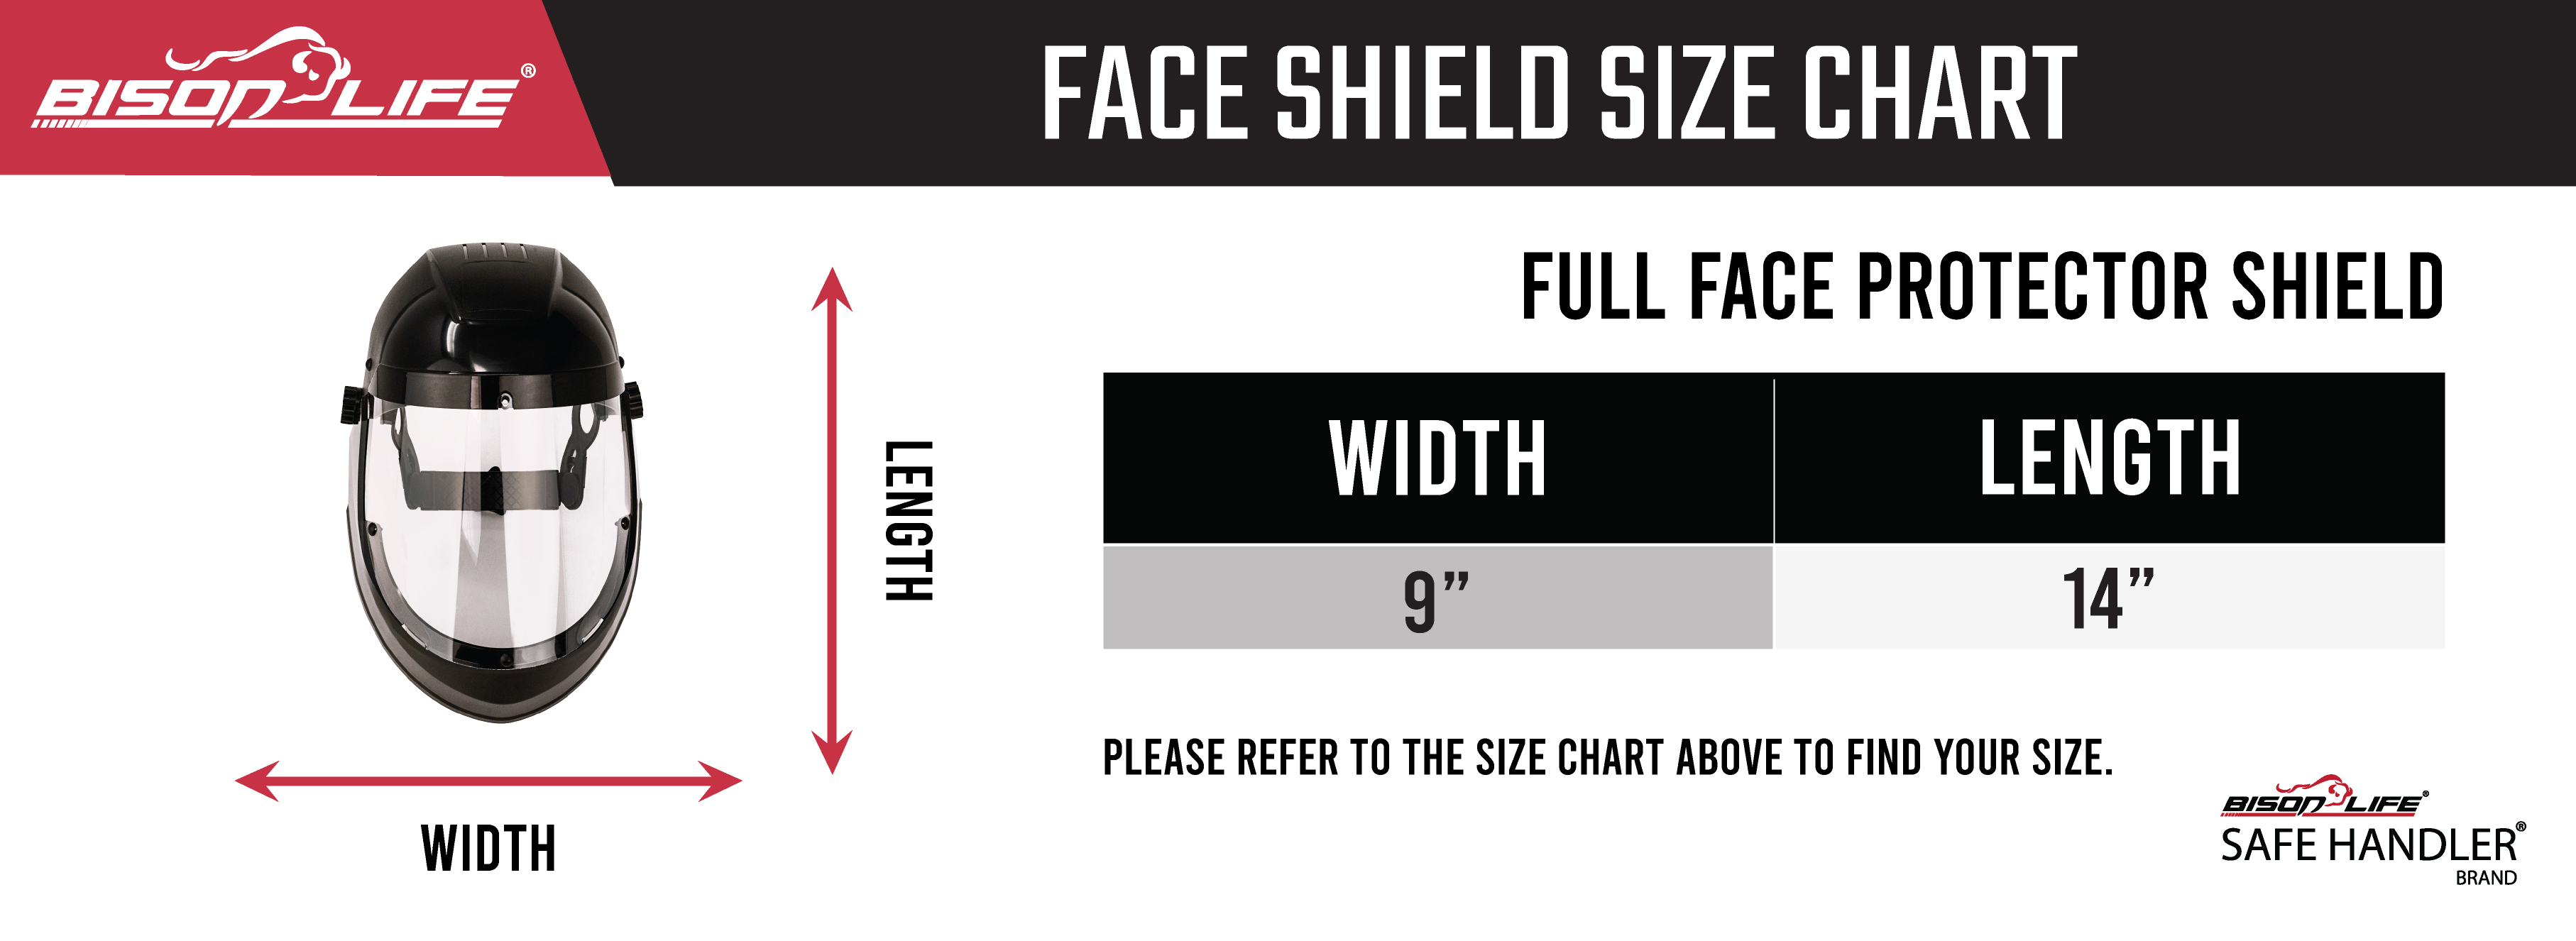 Safe Handler Full Face Protector Shield, Reusable Safety Face Shield, Black (Pack of 1)